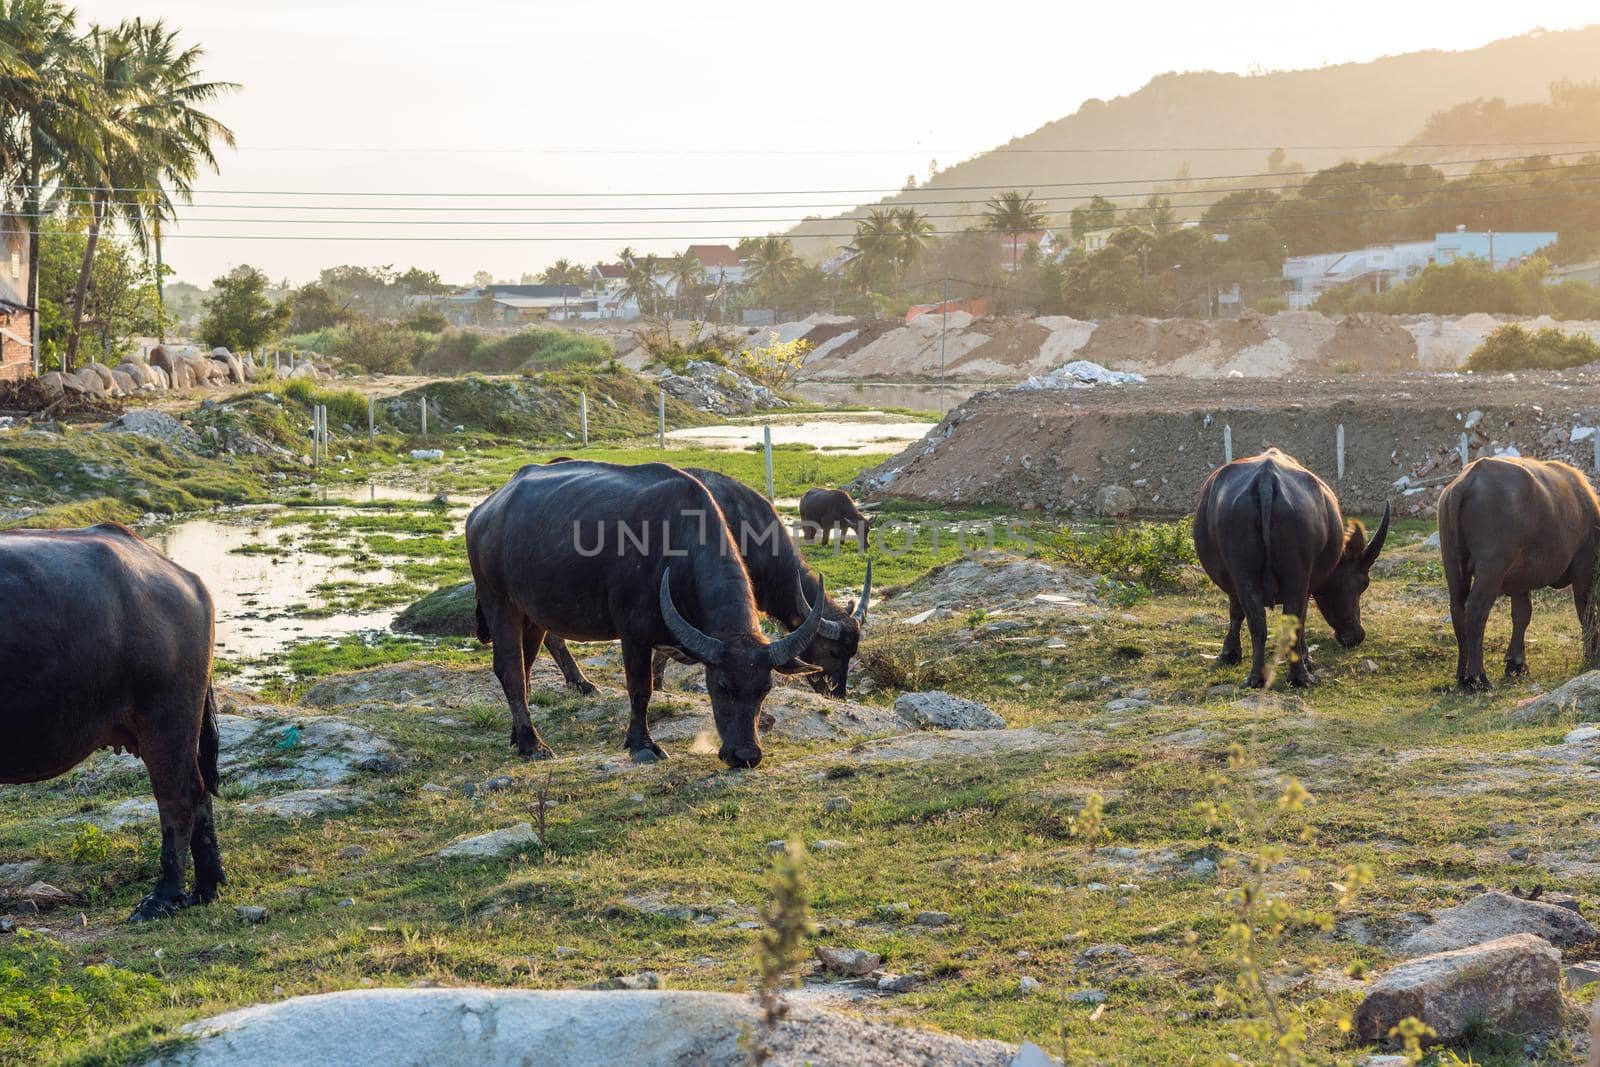 Buffaloes in the field in Vietnam, Nha Trang by galitskaya